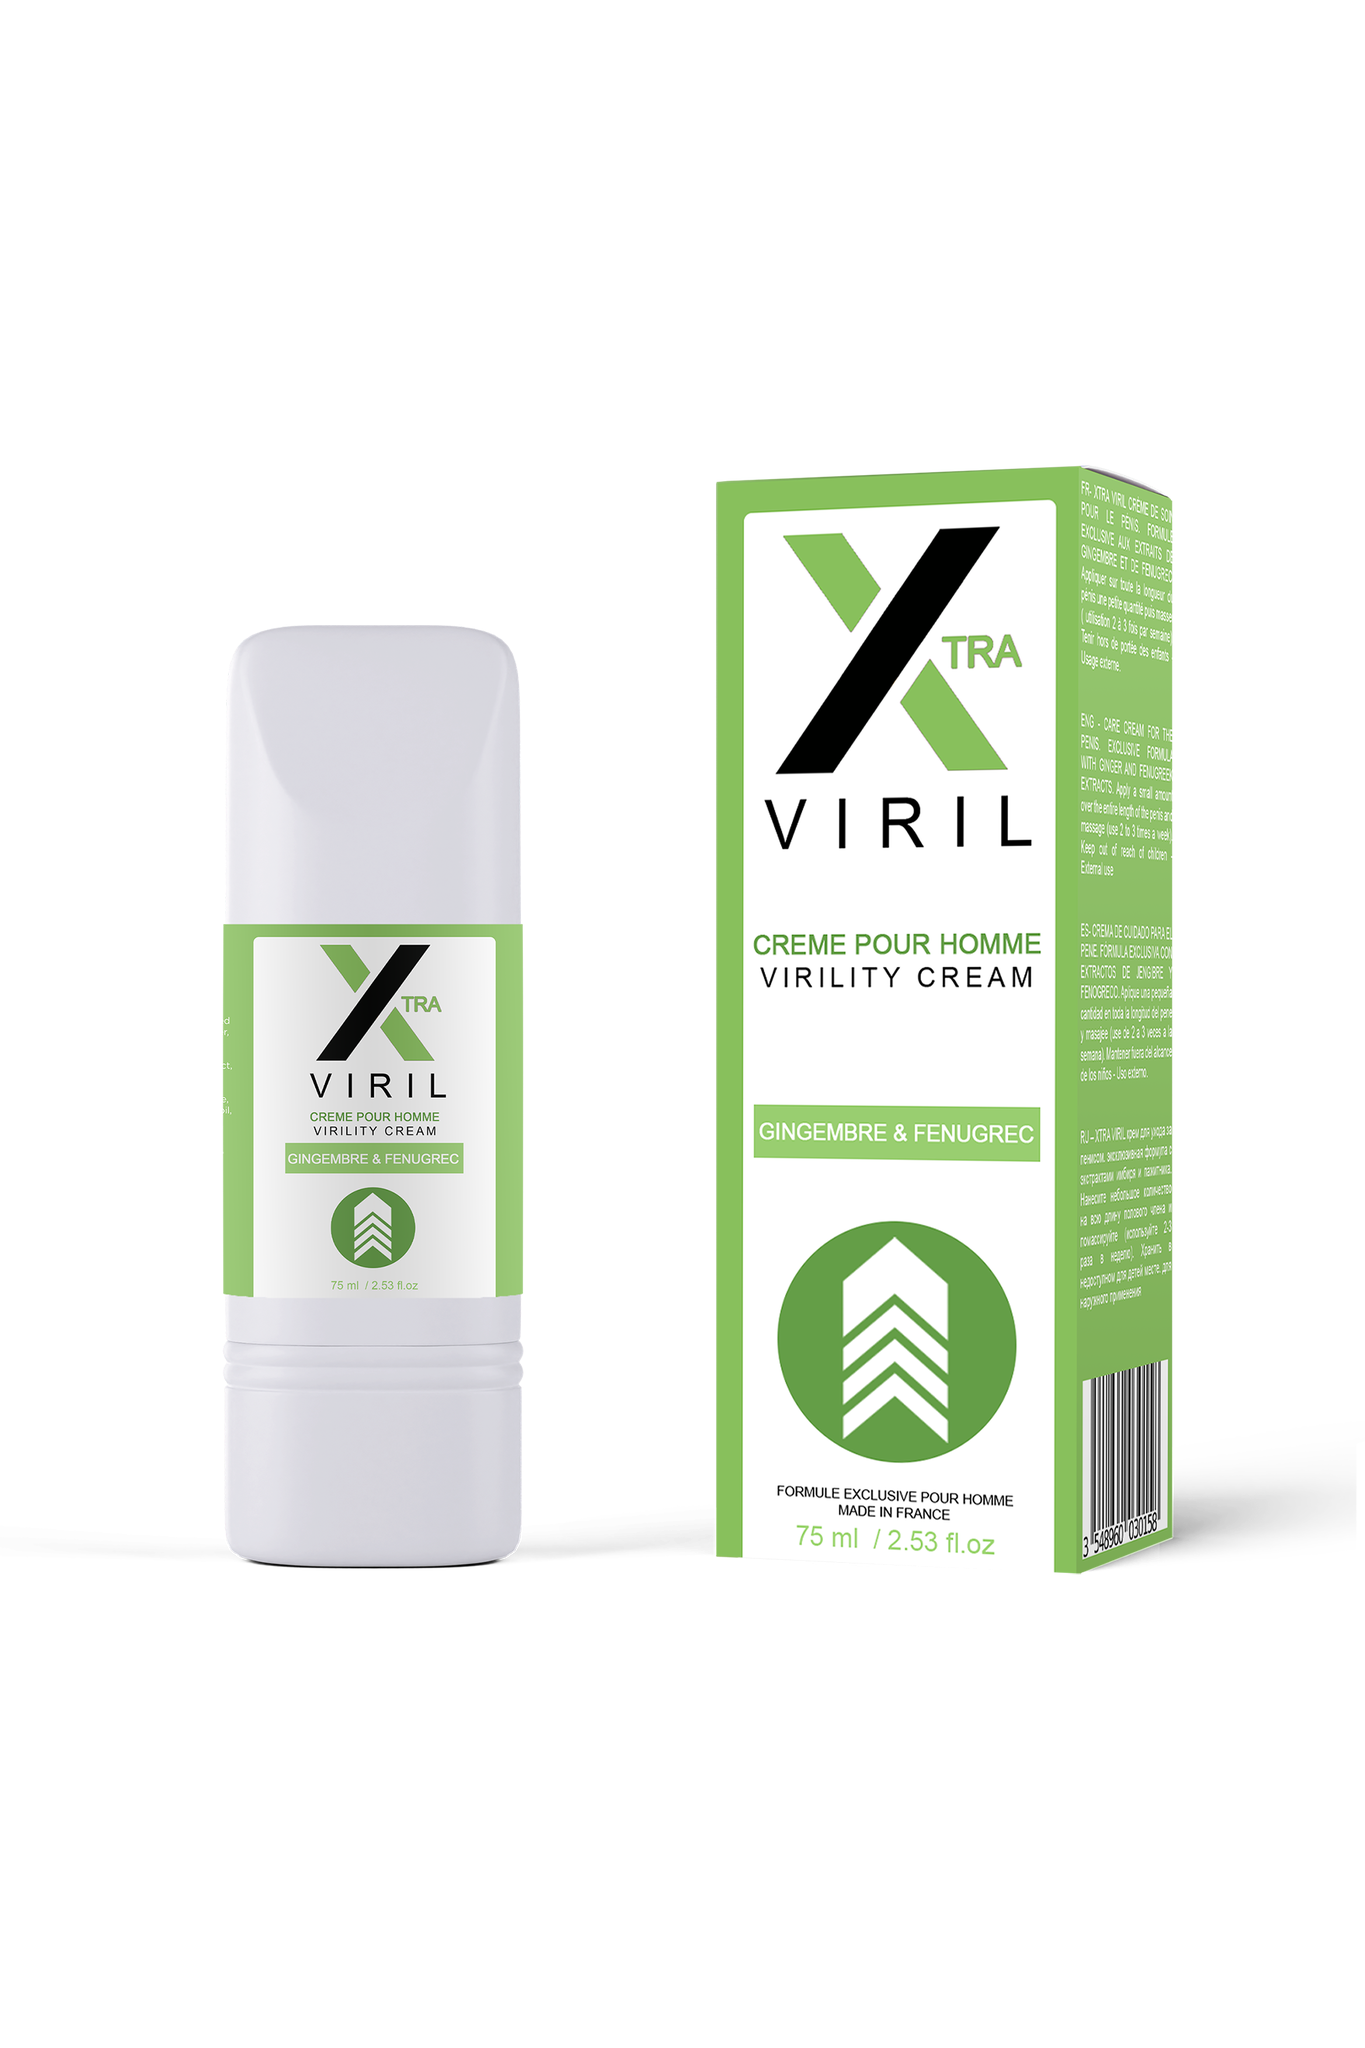 Xtra Viril penis enhancement cream, 75ml